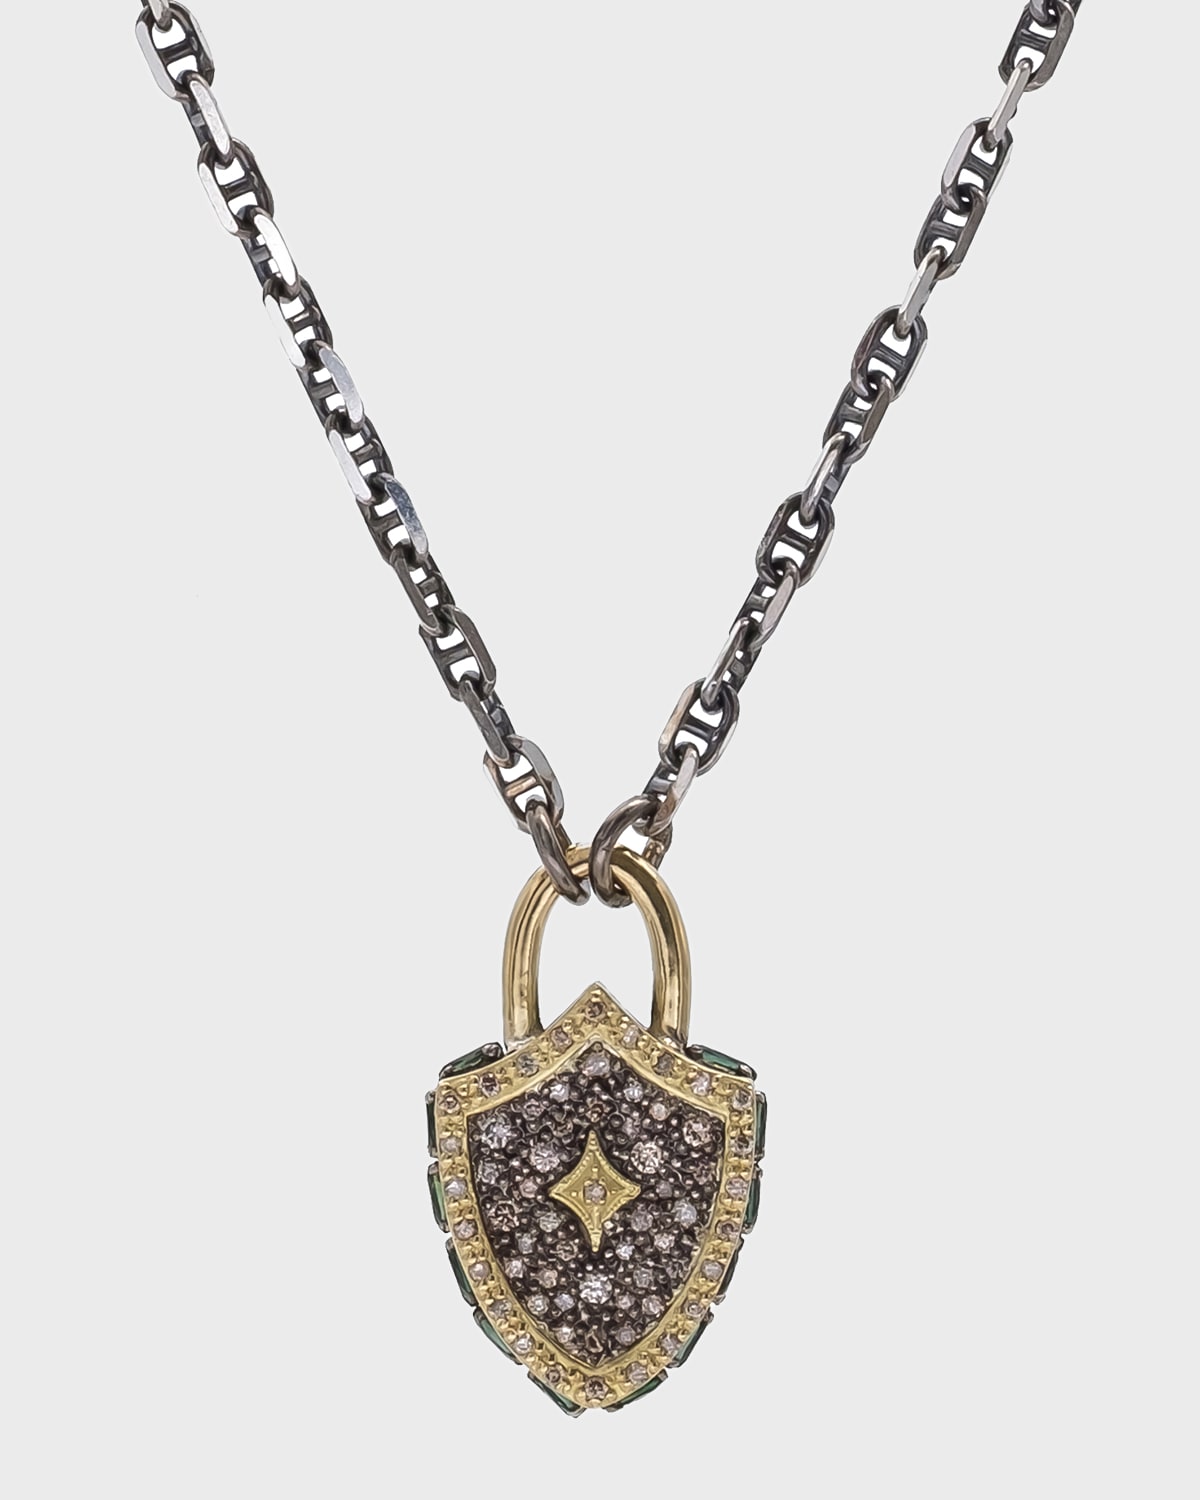 Old World Diamond Shield Pendant Necklace